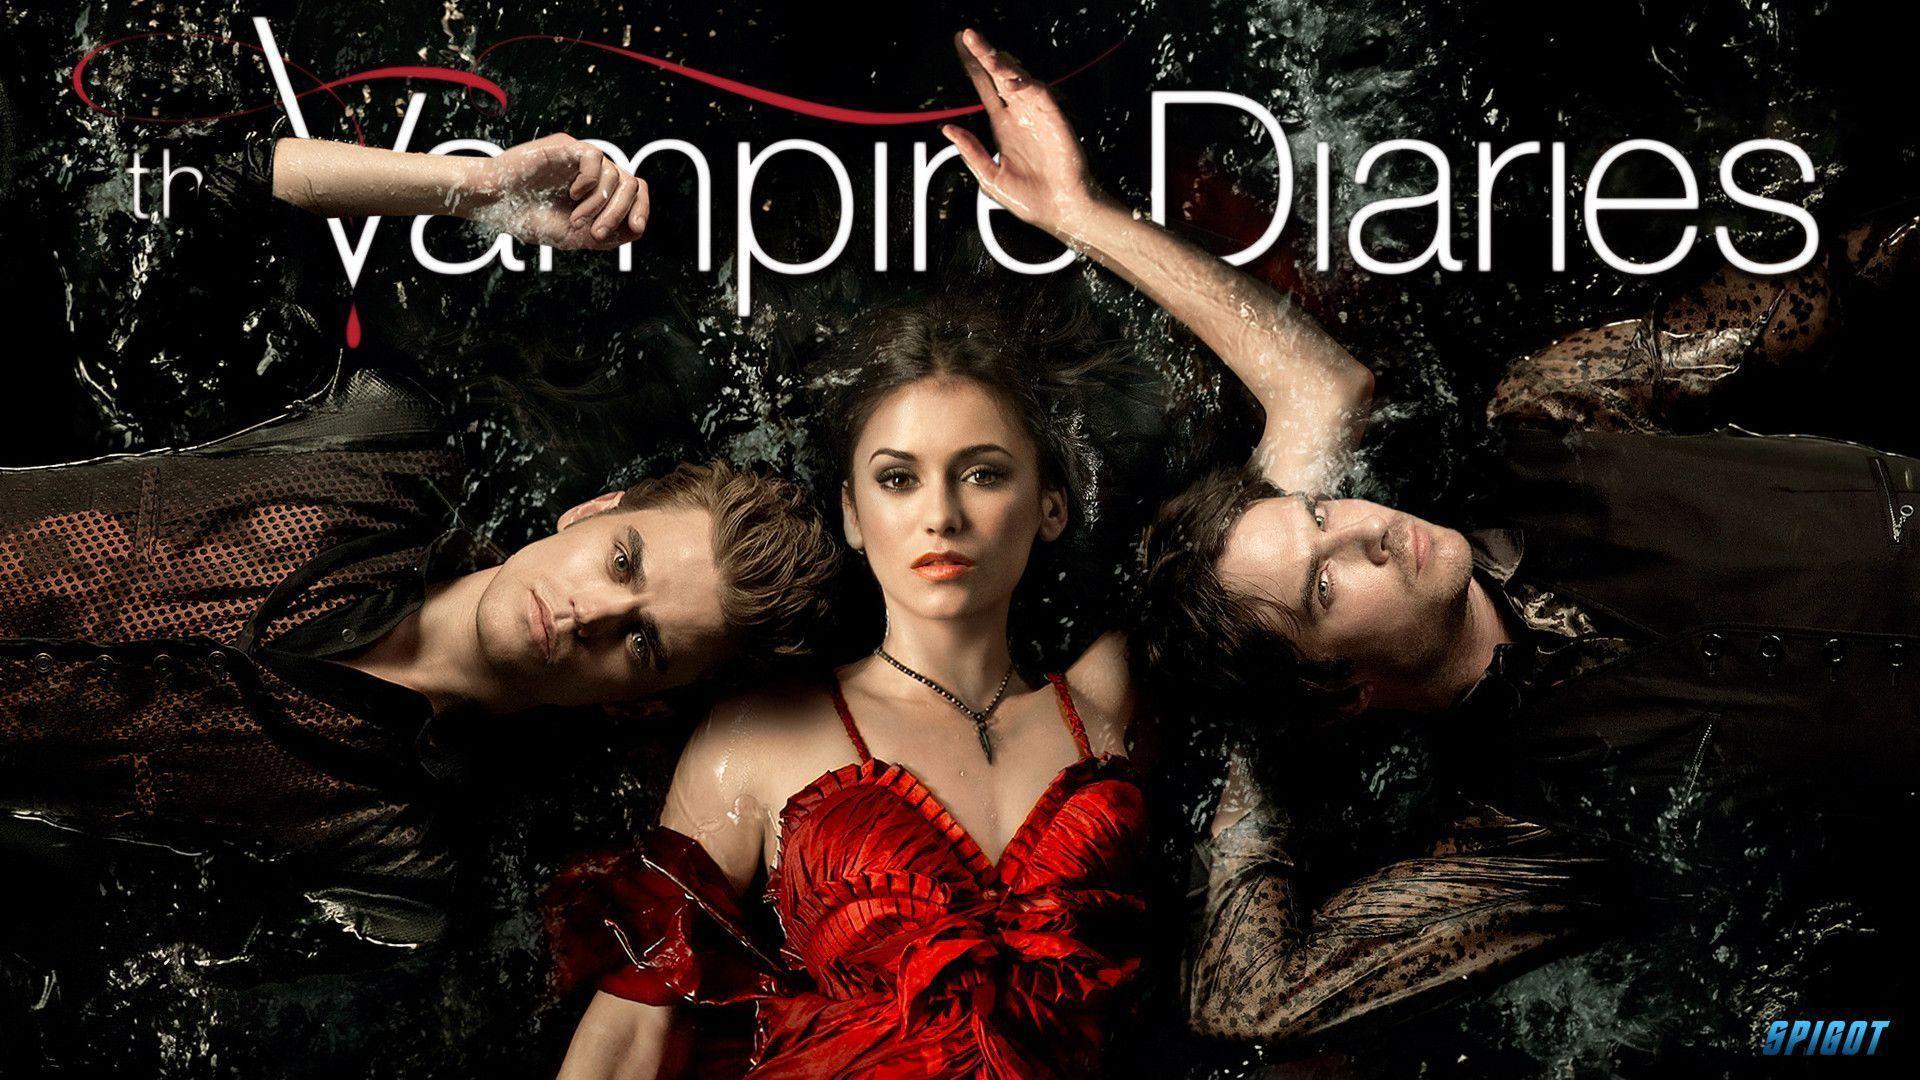 The Last Of The Vampire Diaries Wallpaper. George Spigot&;s Blog